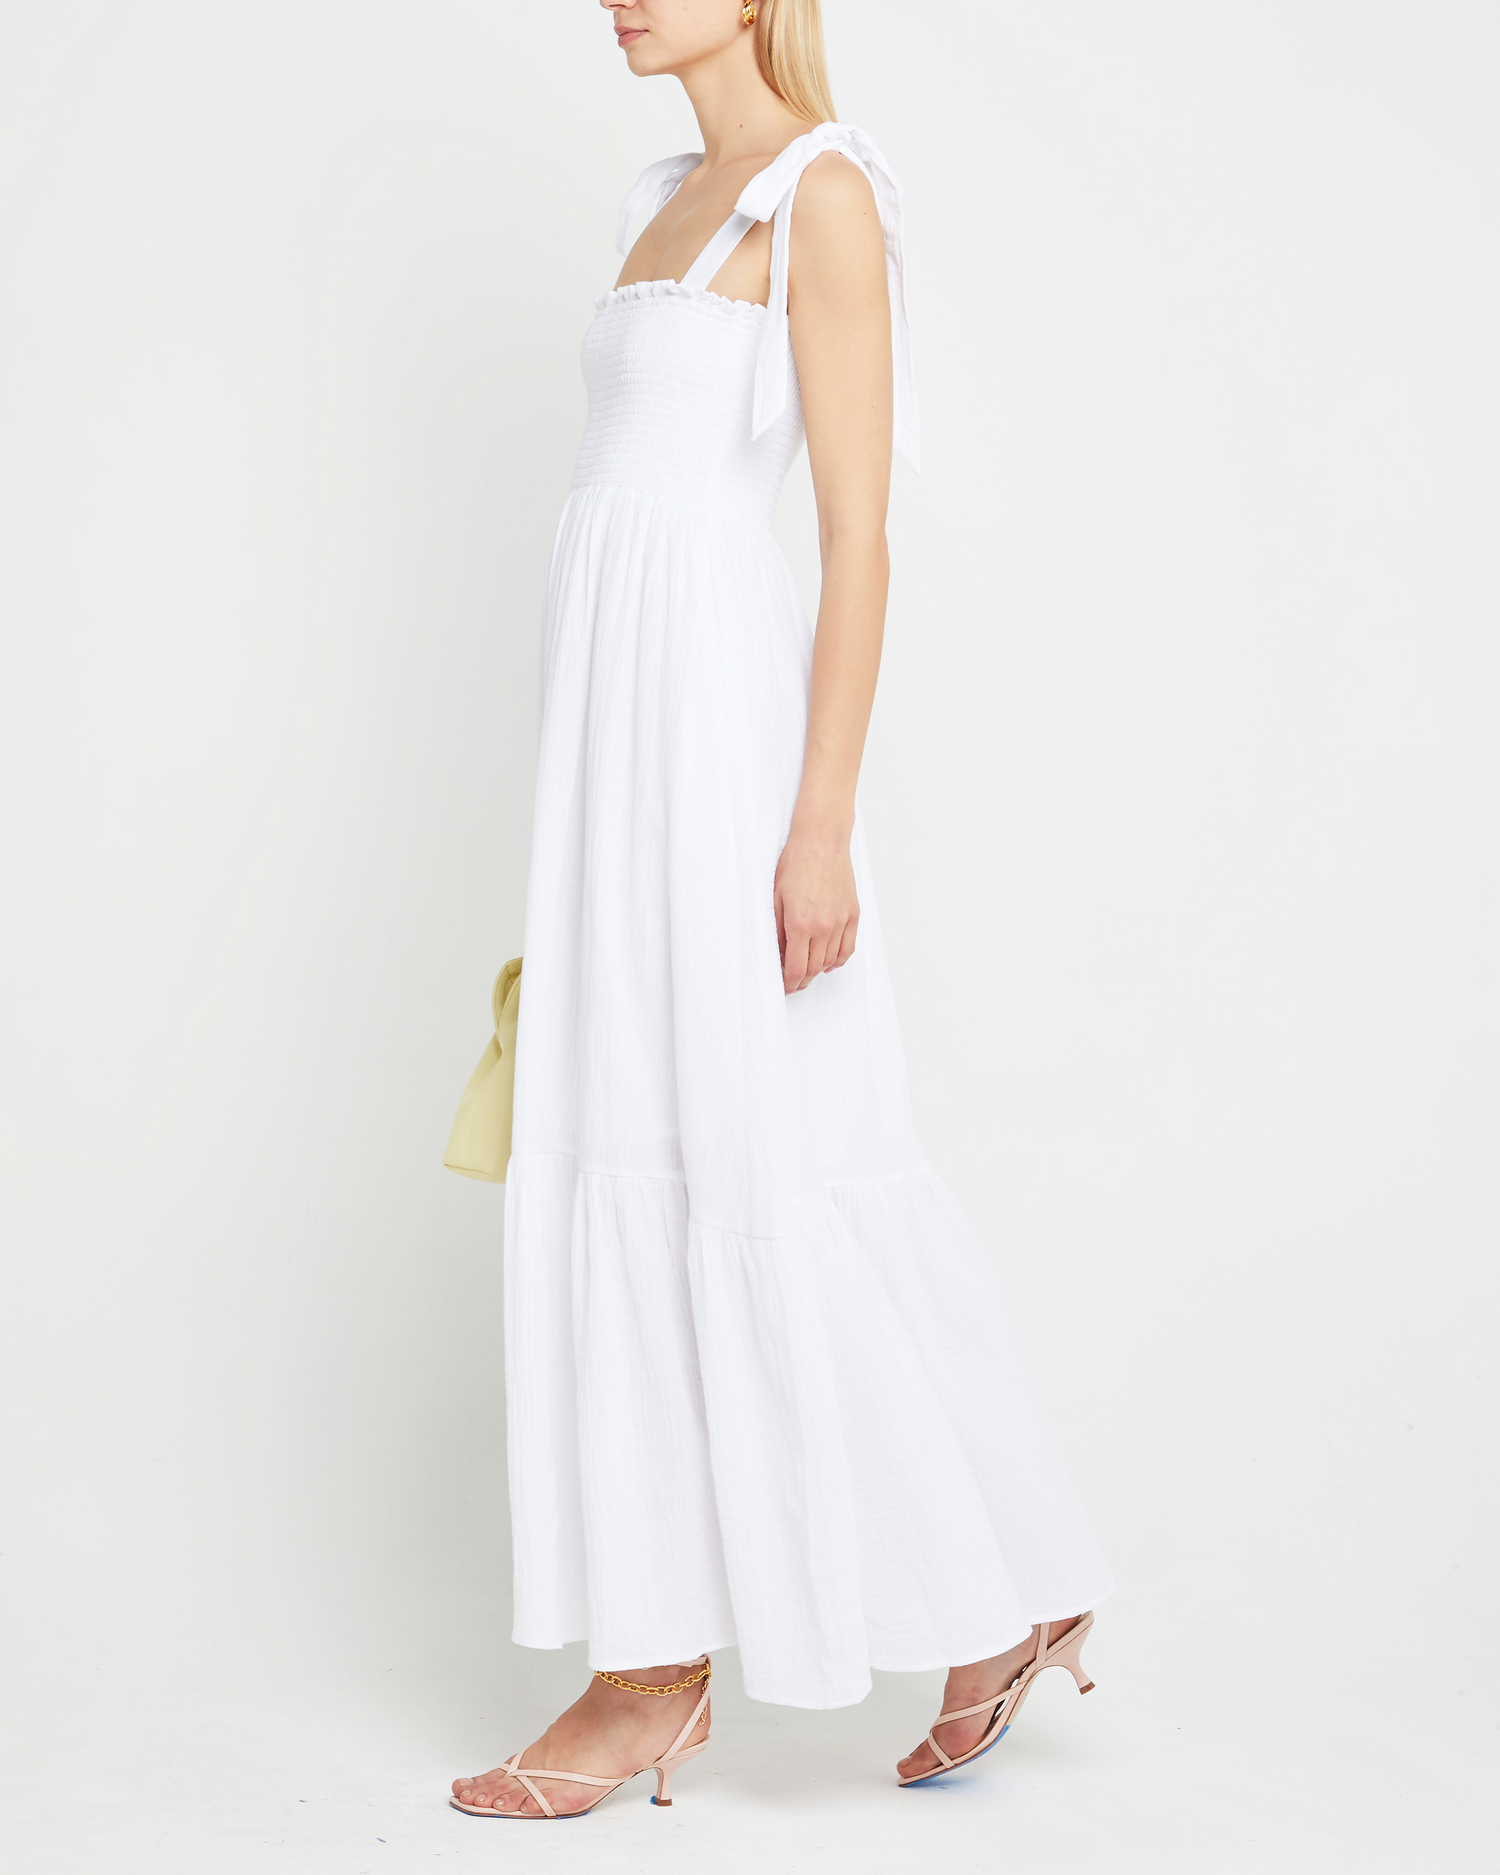 Fourth image of Cotton Winnie Dress, a white maxi dress, tie straps, smocked bodice